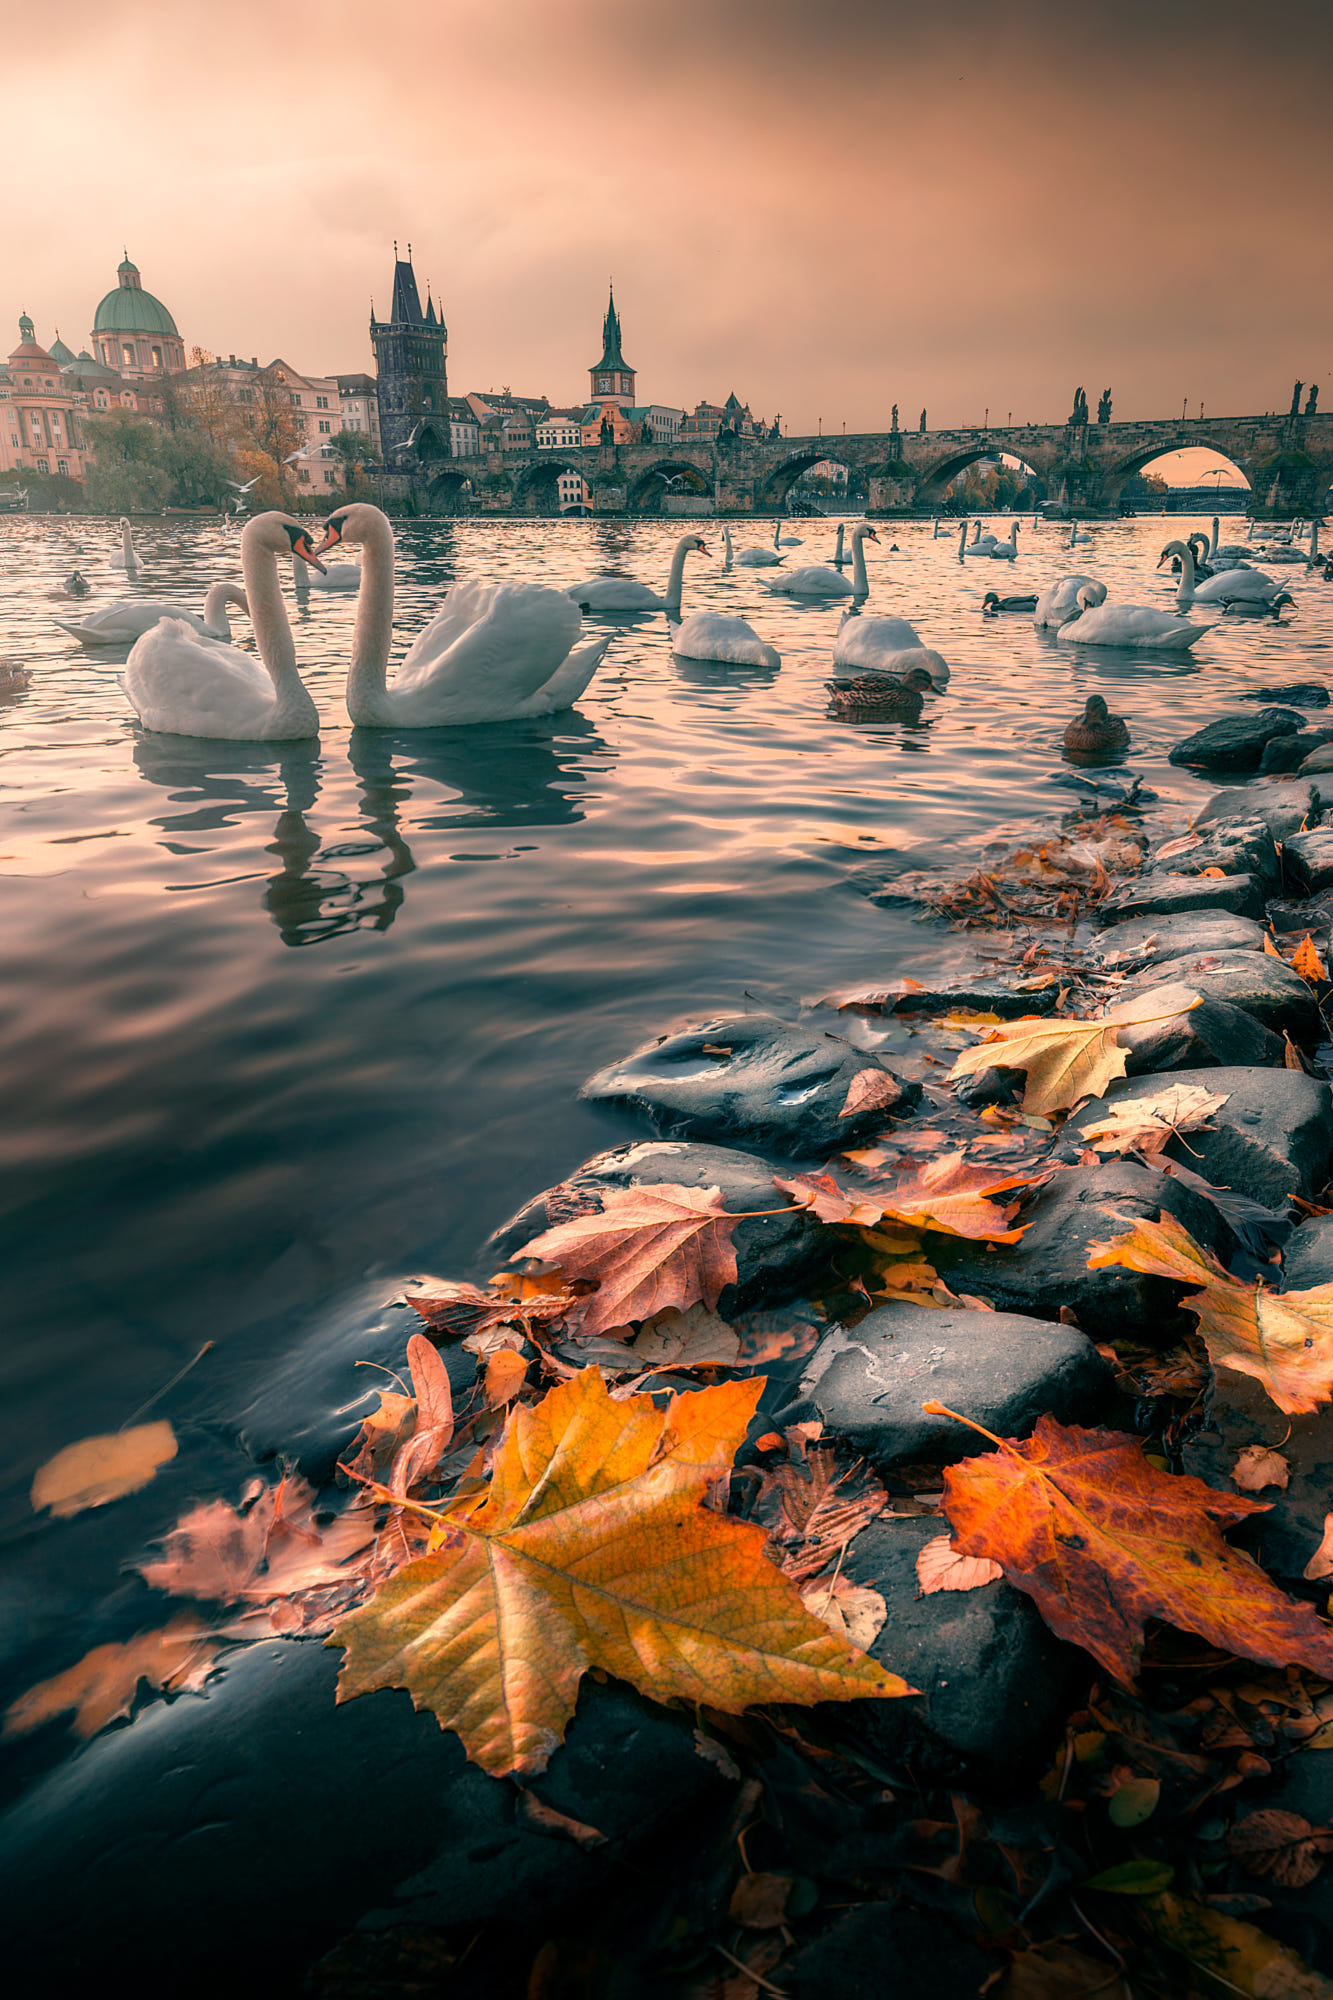 Фото Лебеди на воде, на переднем плане осенние листья на камнях, фотограф Д°lhan Eroglu